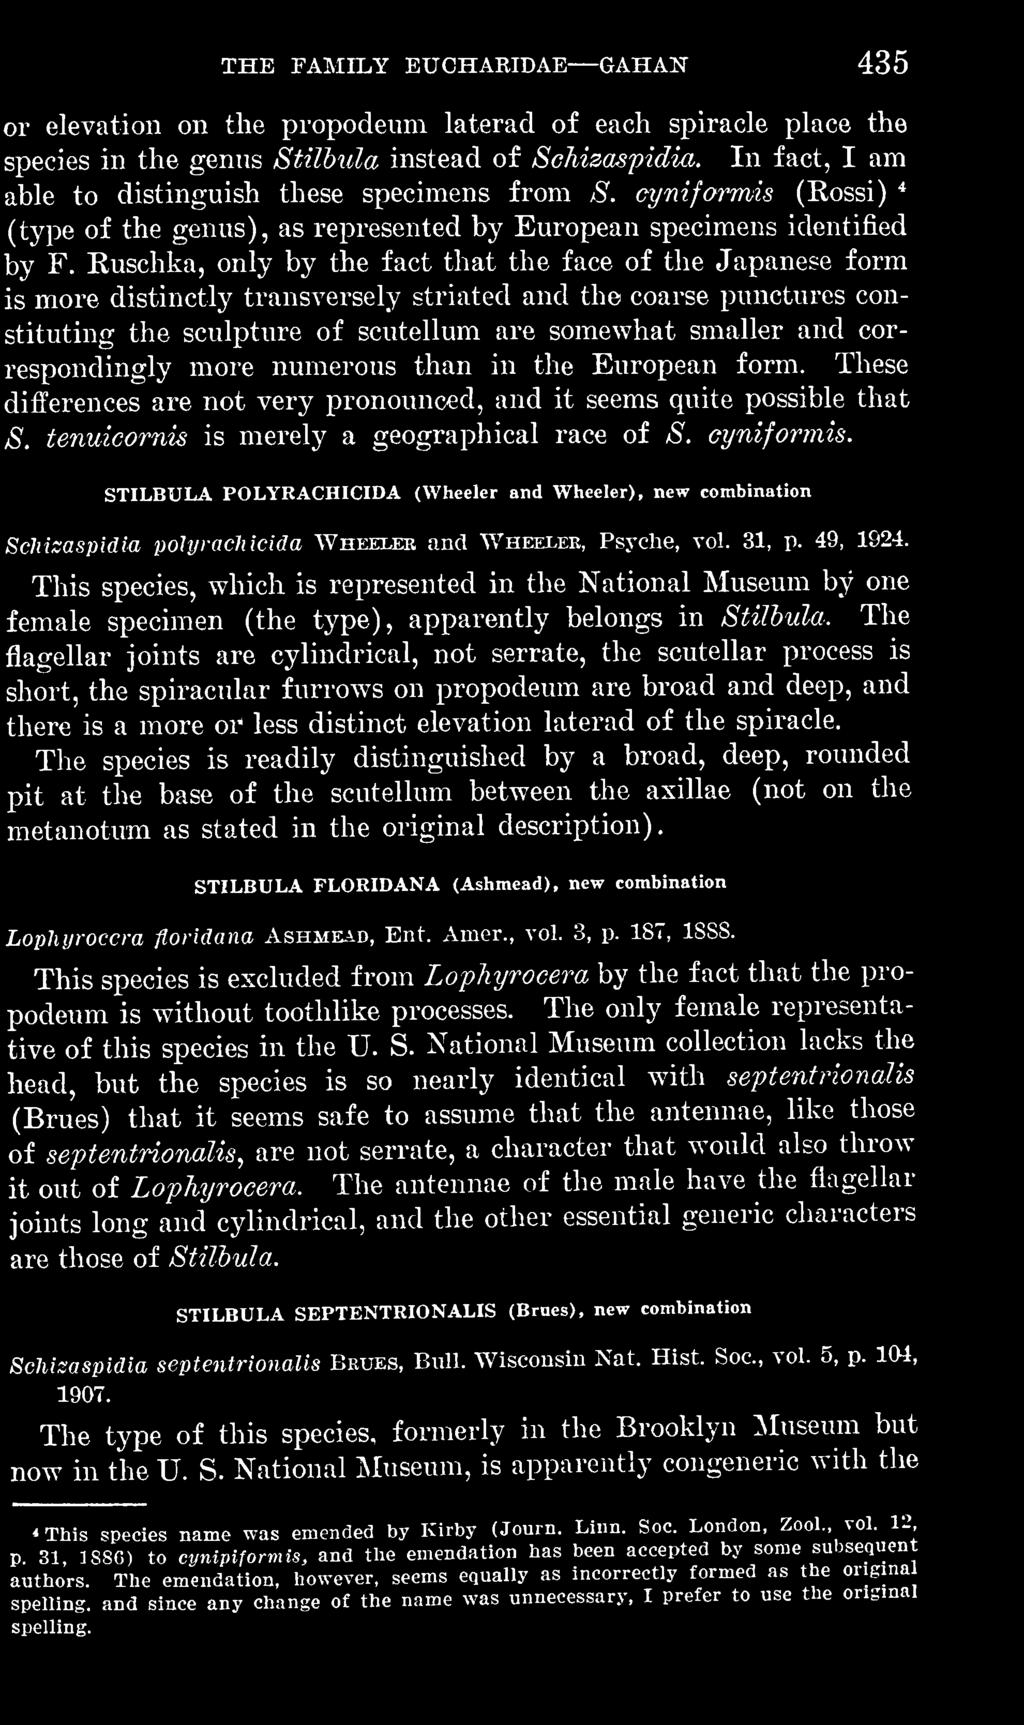 STILBULA POLYRACHICIDA (Wheeler and Wheeler), new combination Schizaspidia polijracliicida Wheeleb and Wheexee, Psyche, vol. 31, p. 49, 1924.